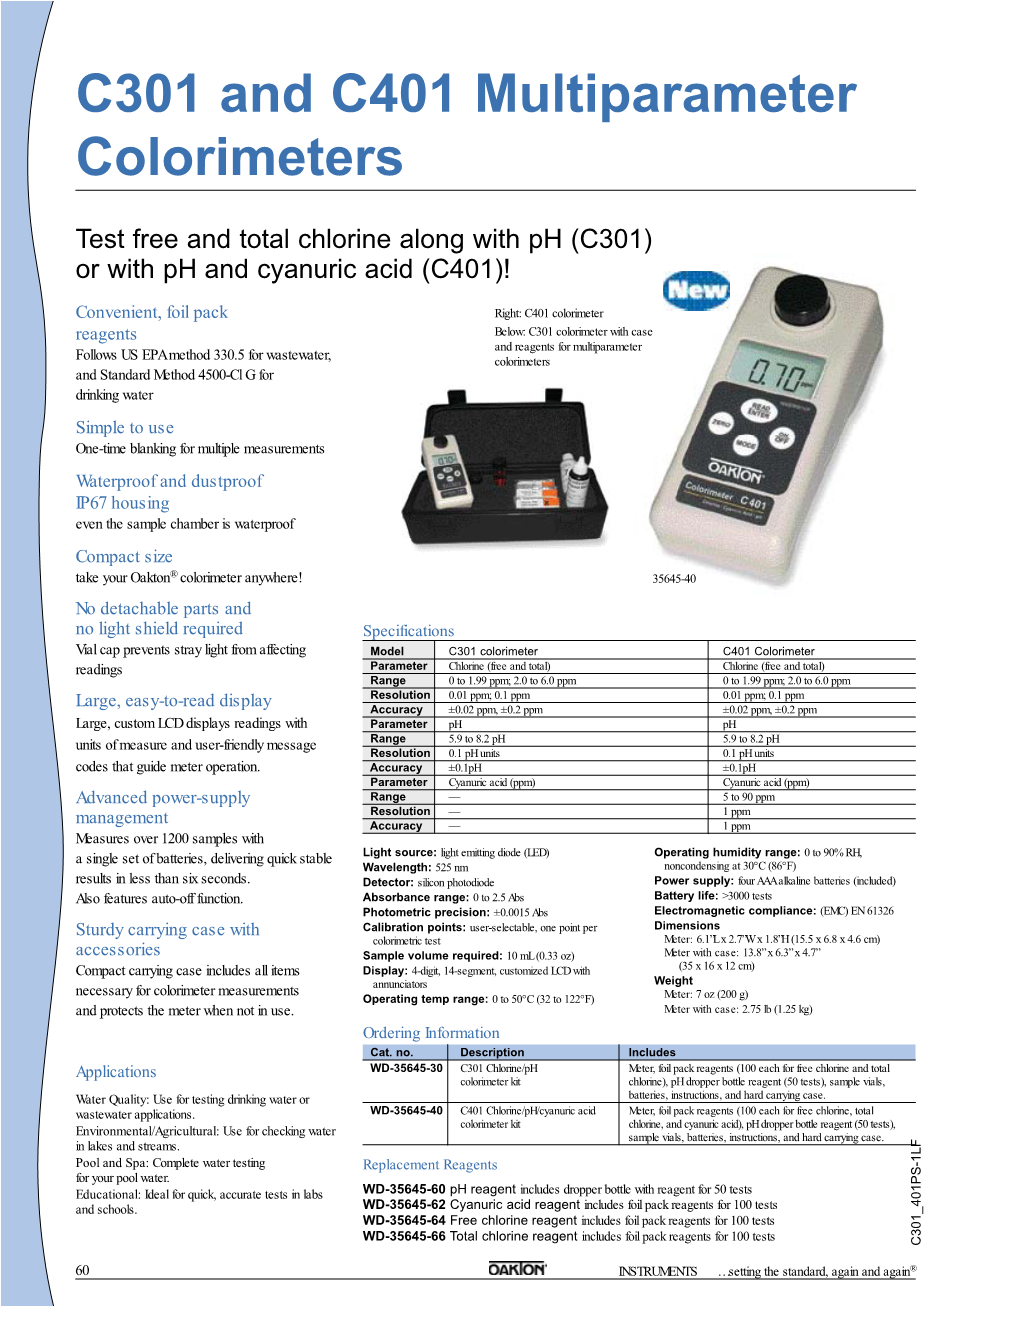 C301 and C401 Multiparameter Colorimeters